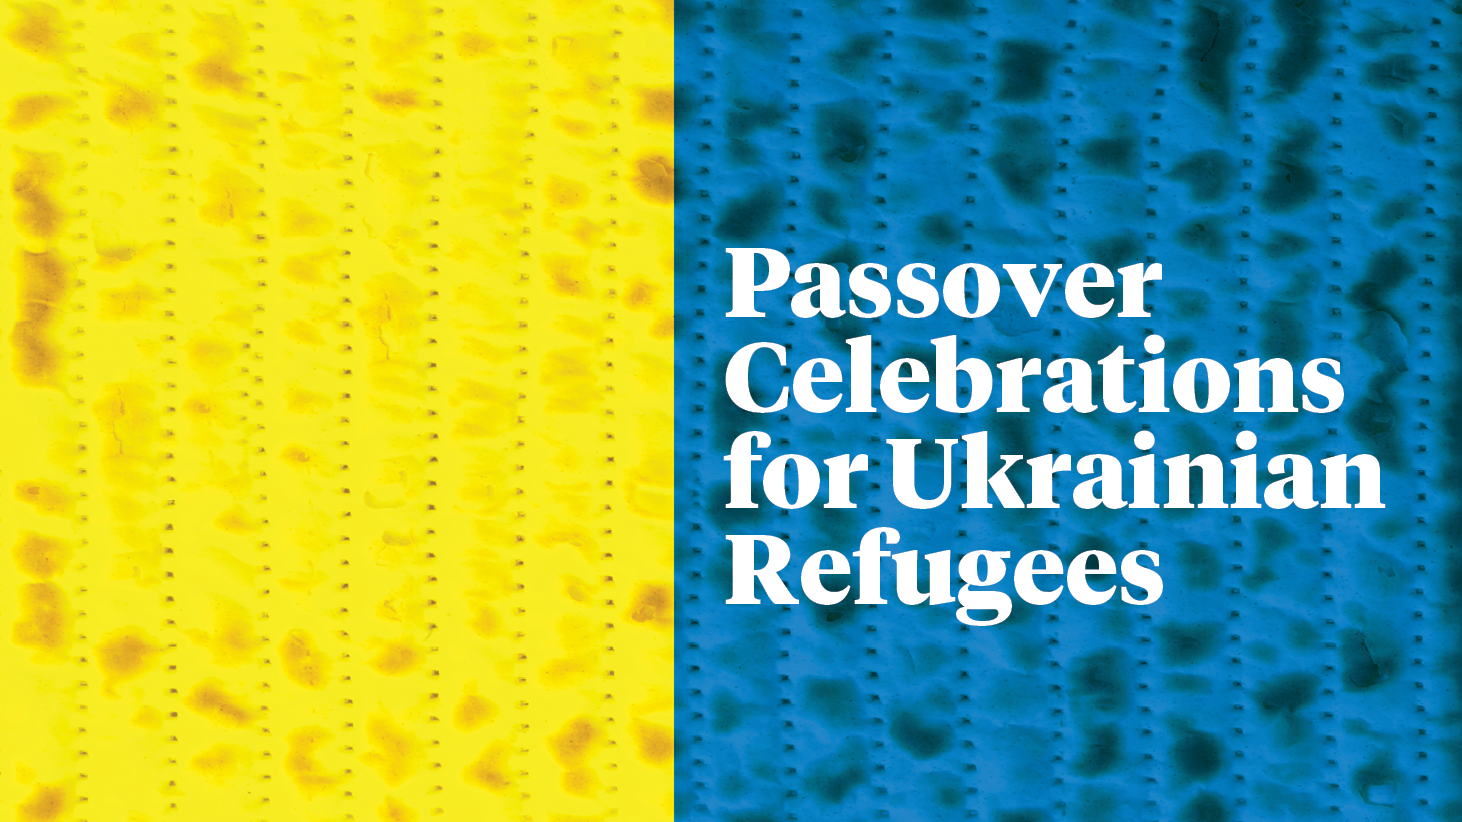 Passover Celebrations for Ukrainian Refugees